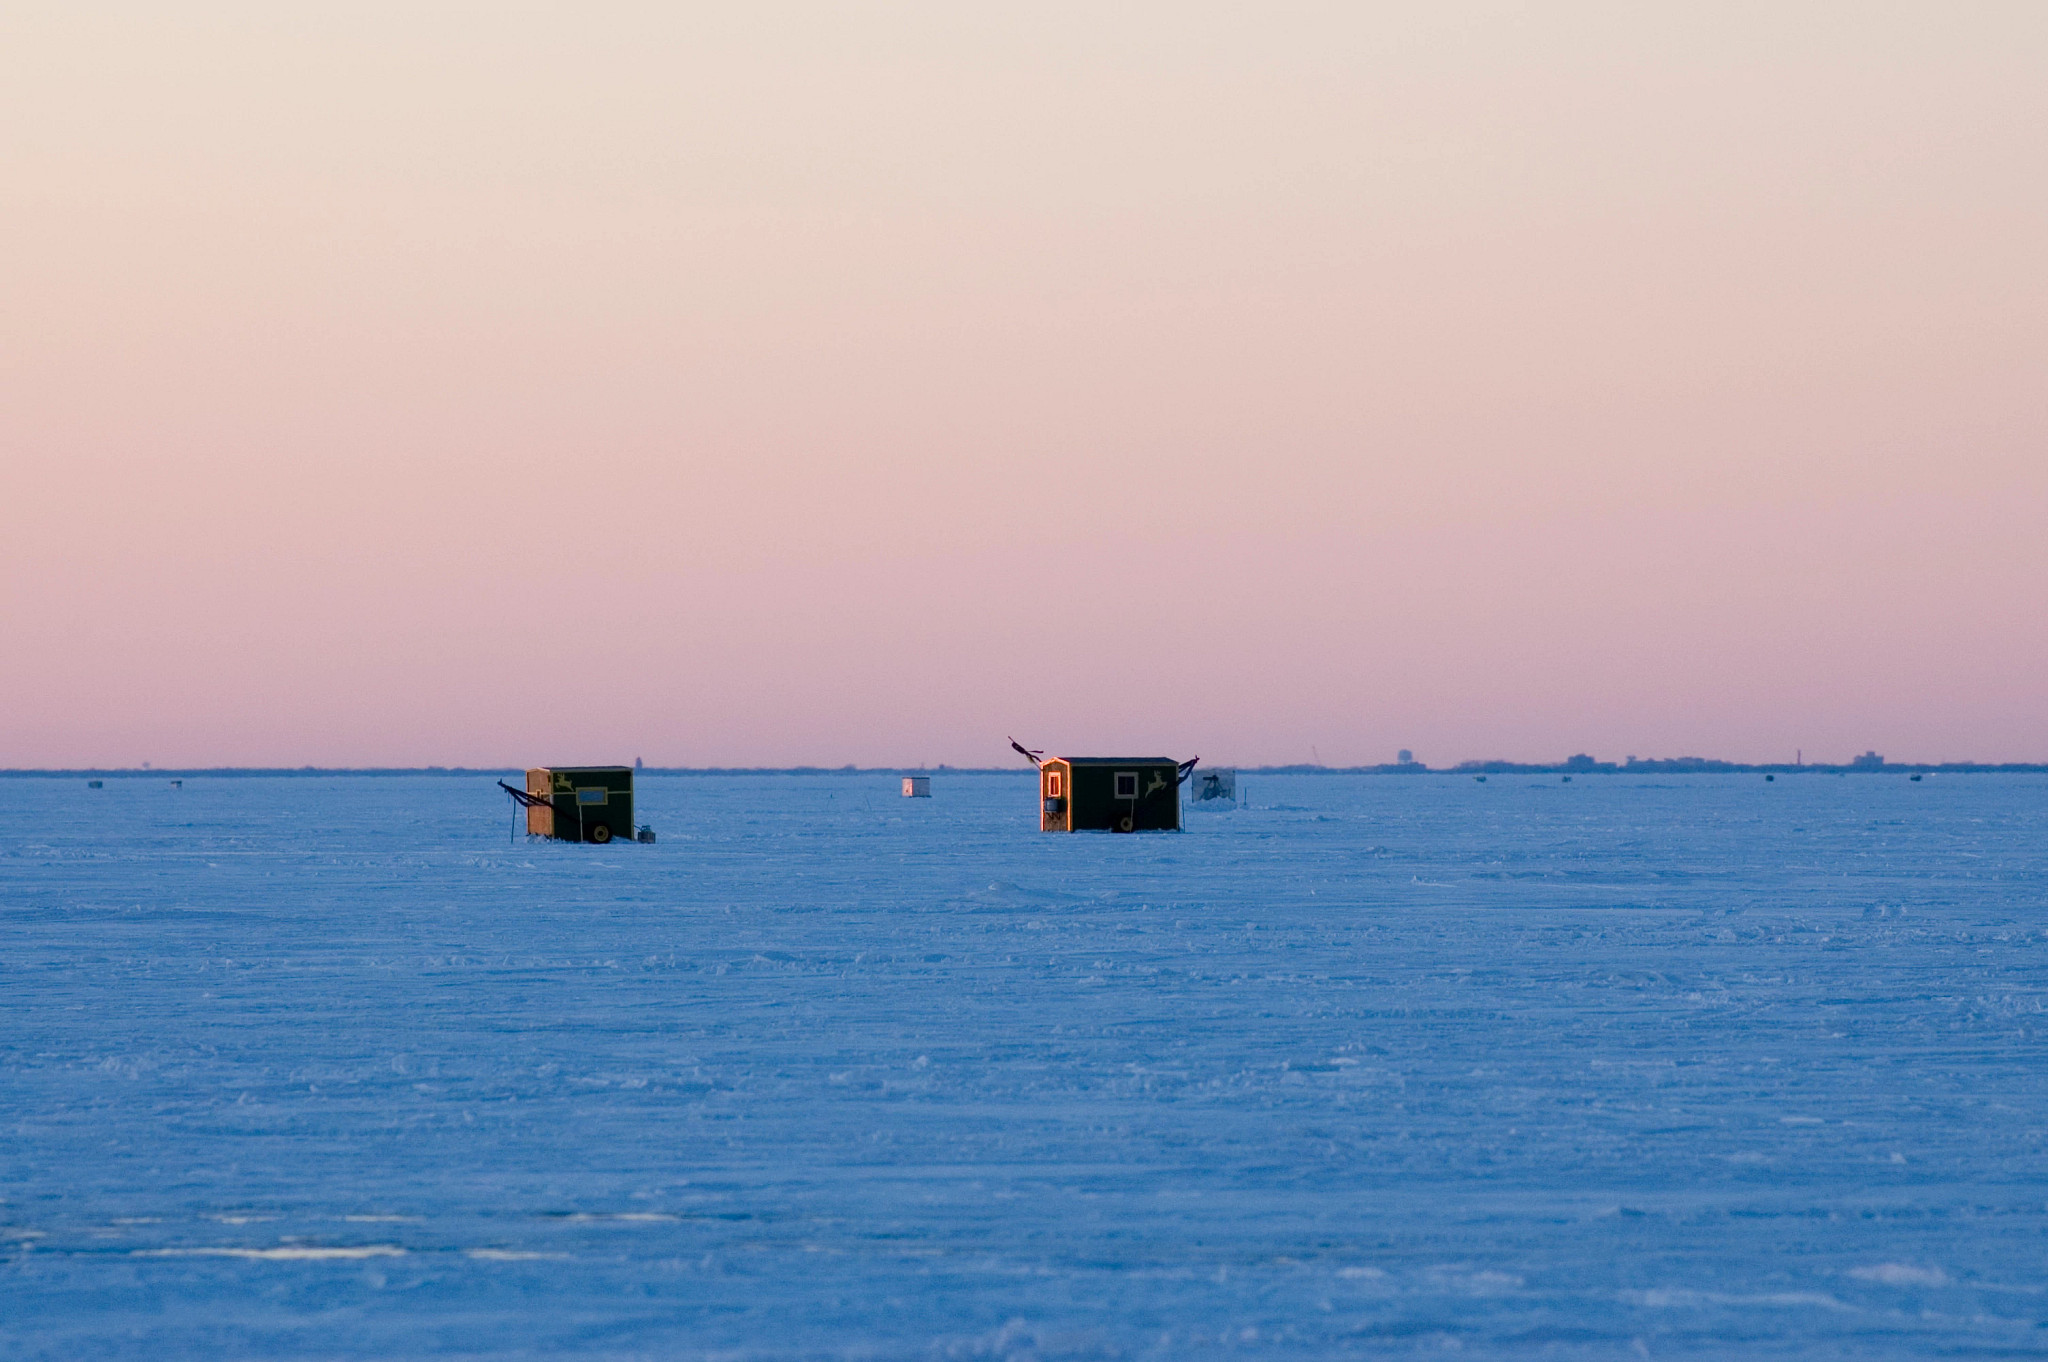 Two ice shanties sitting on the ice around sunrise or sunset.